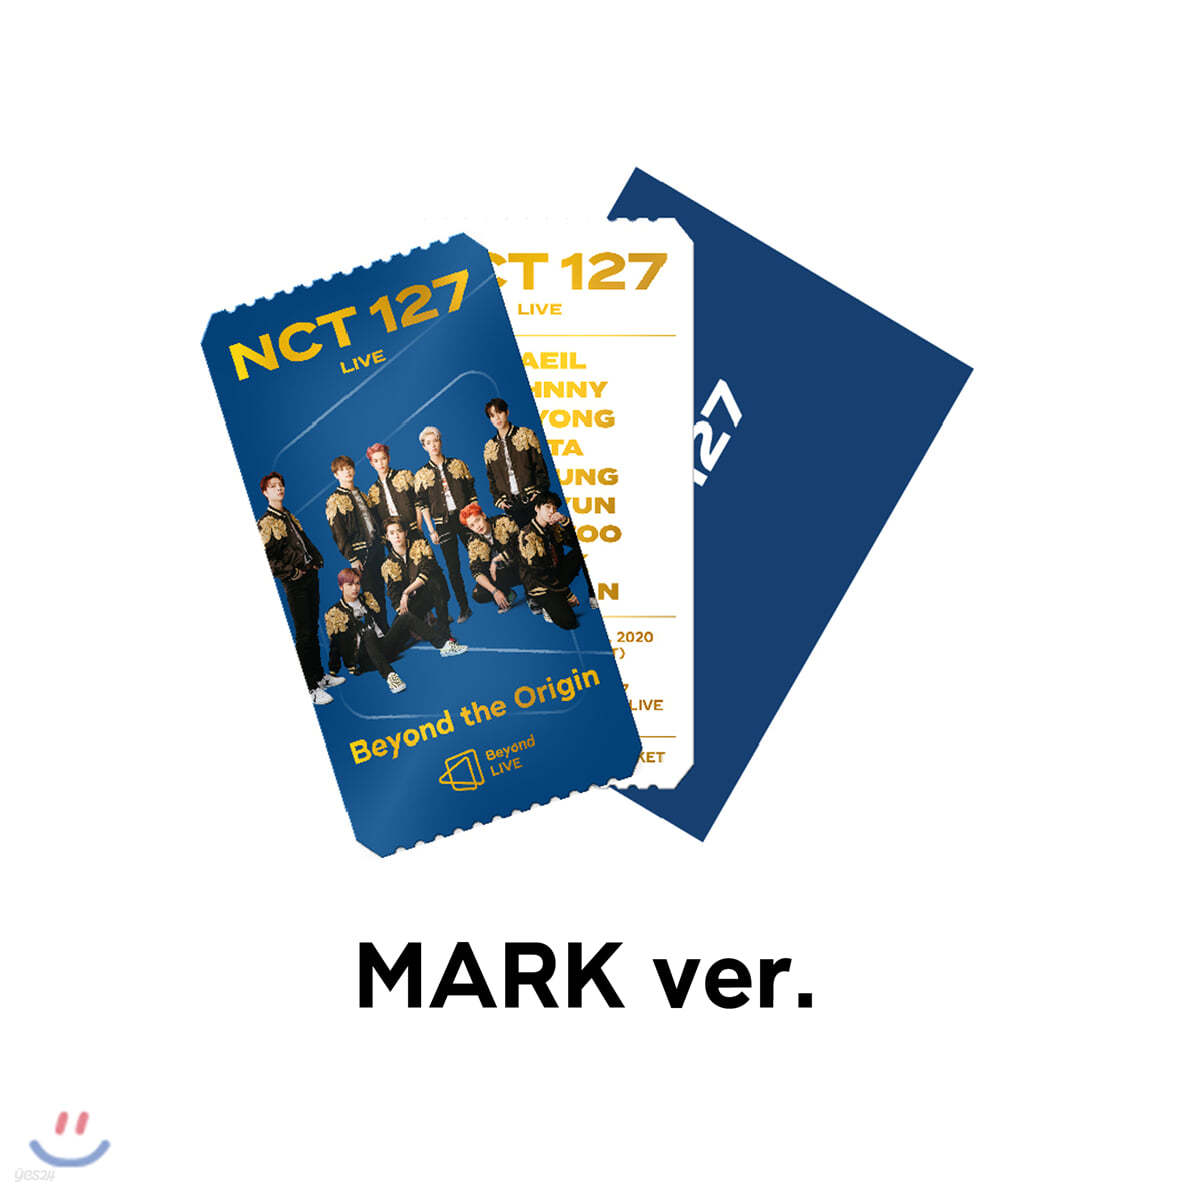 [MARK]  NCT 127 Beyond LIVE Beyond the Origin SPECIAL AR TICKET SET